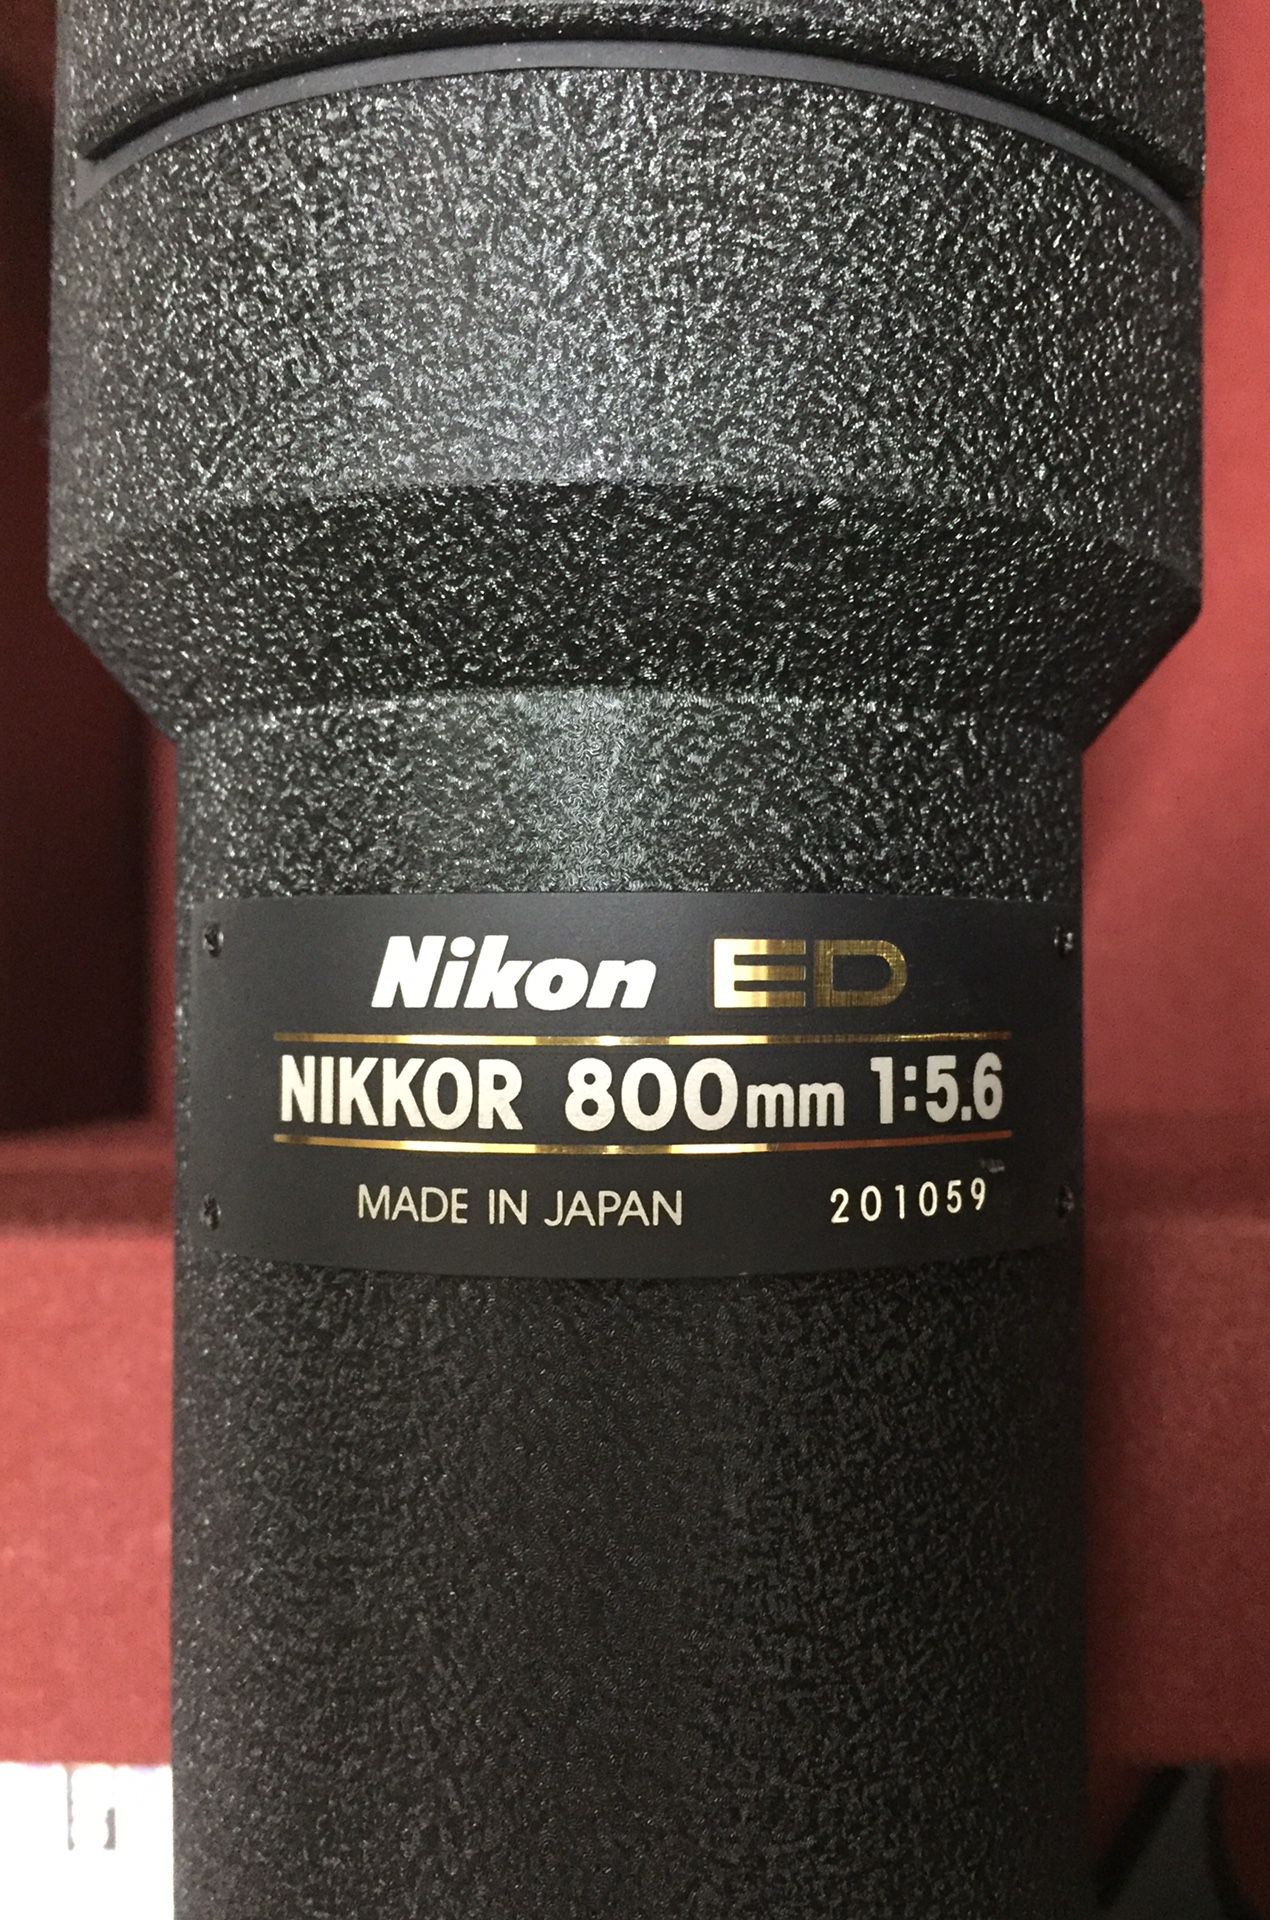 Nikon Nikkor 800mm f:5.6 ED AI-S lens with hard case